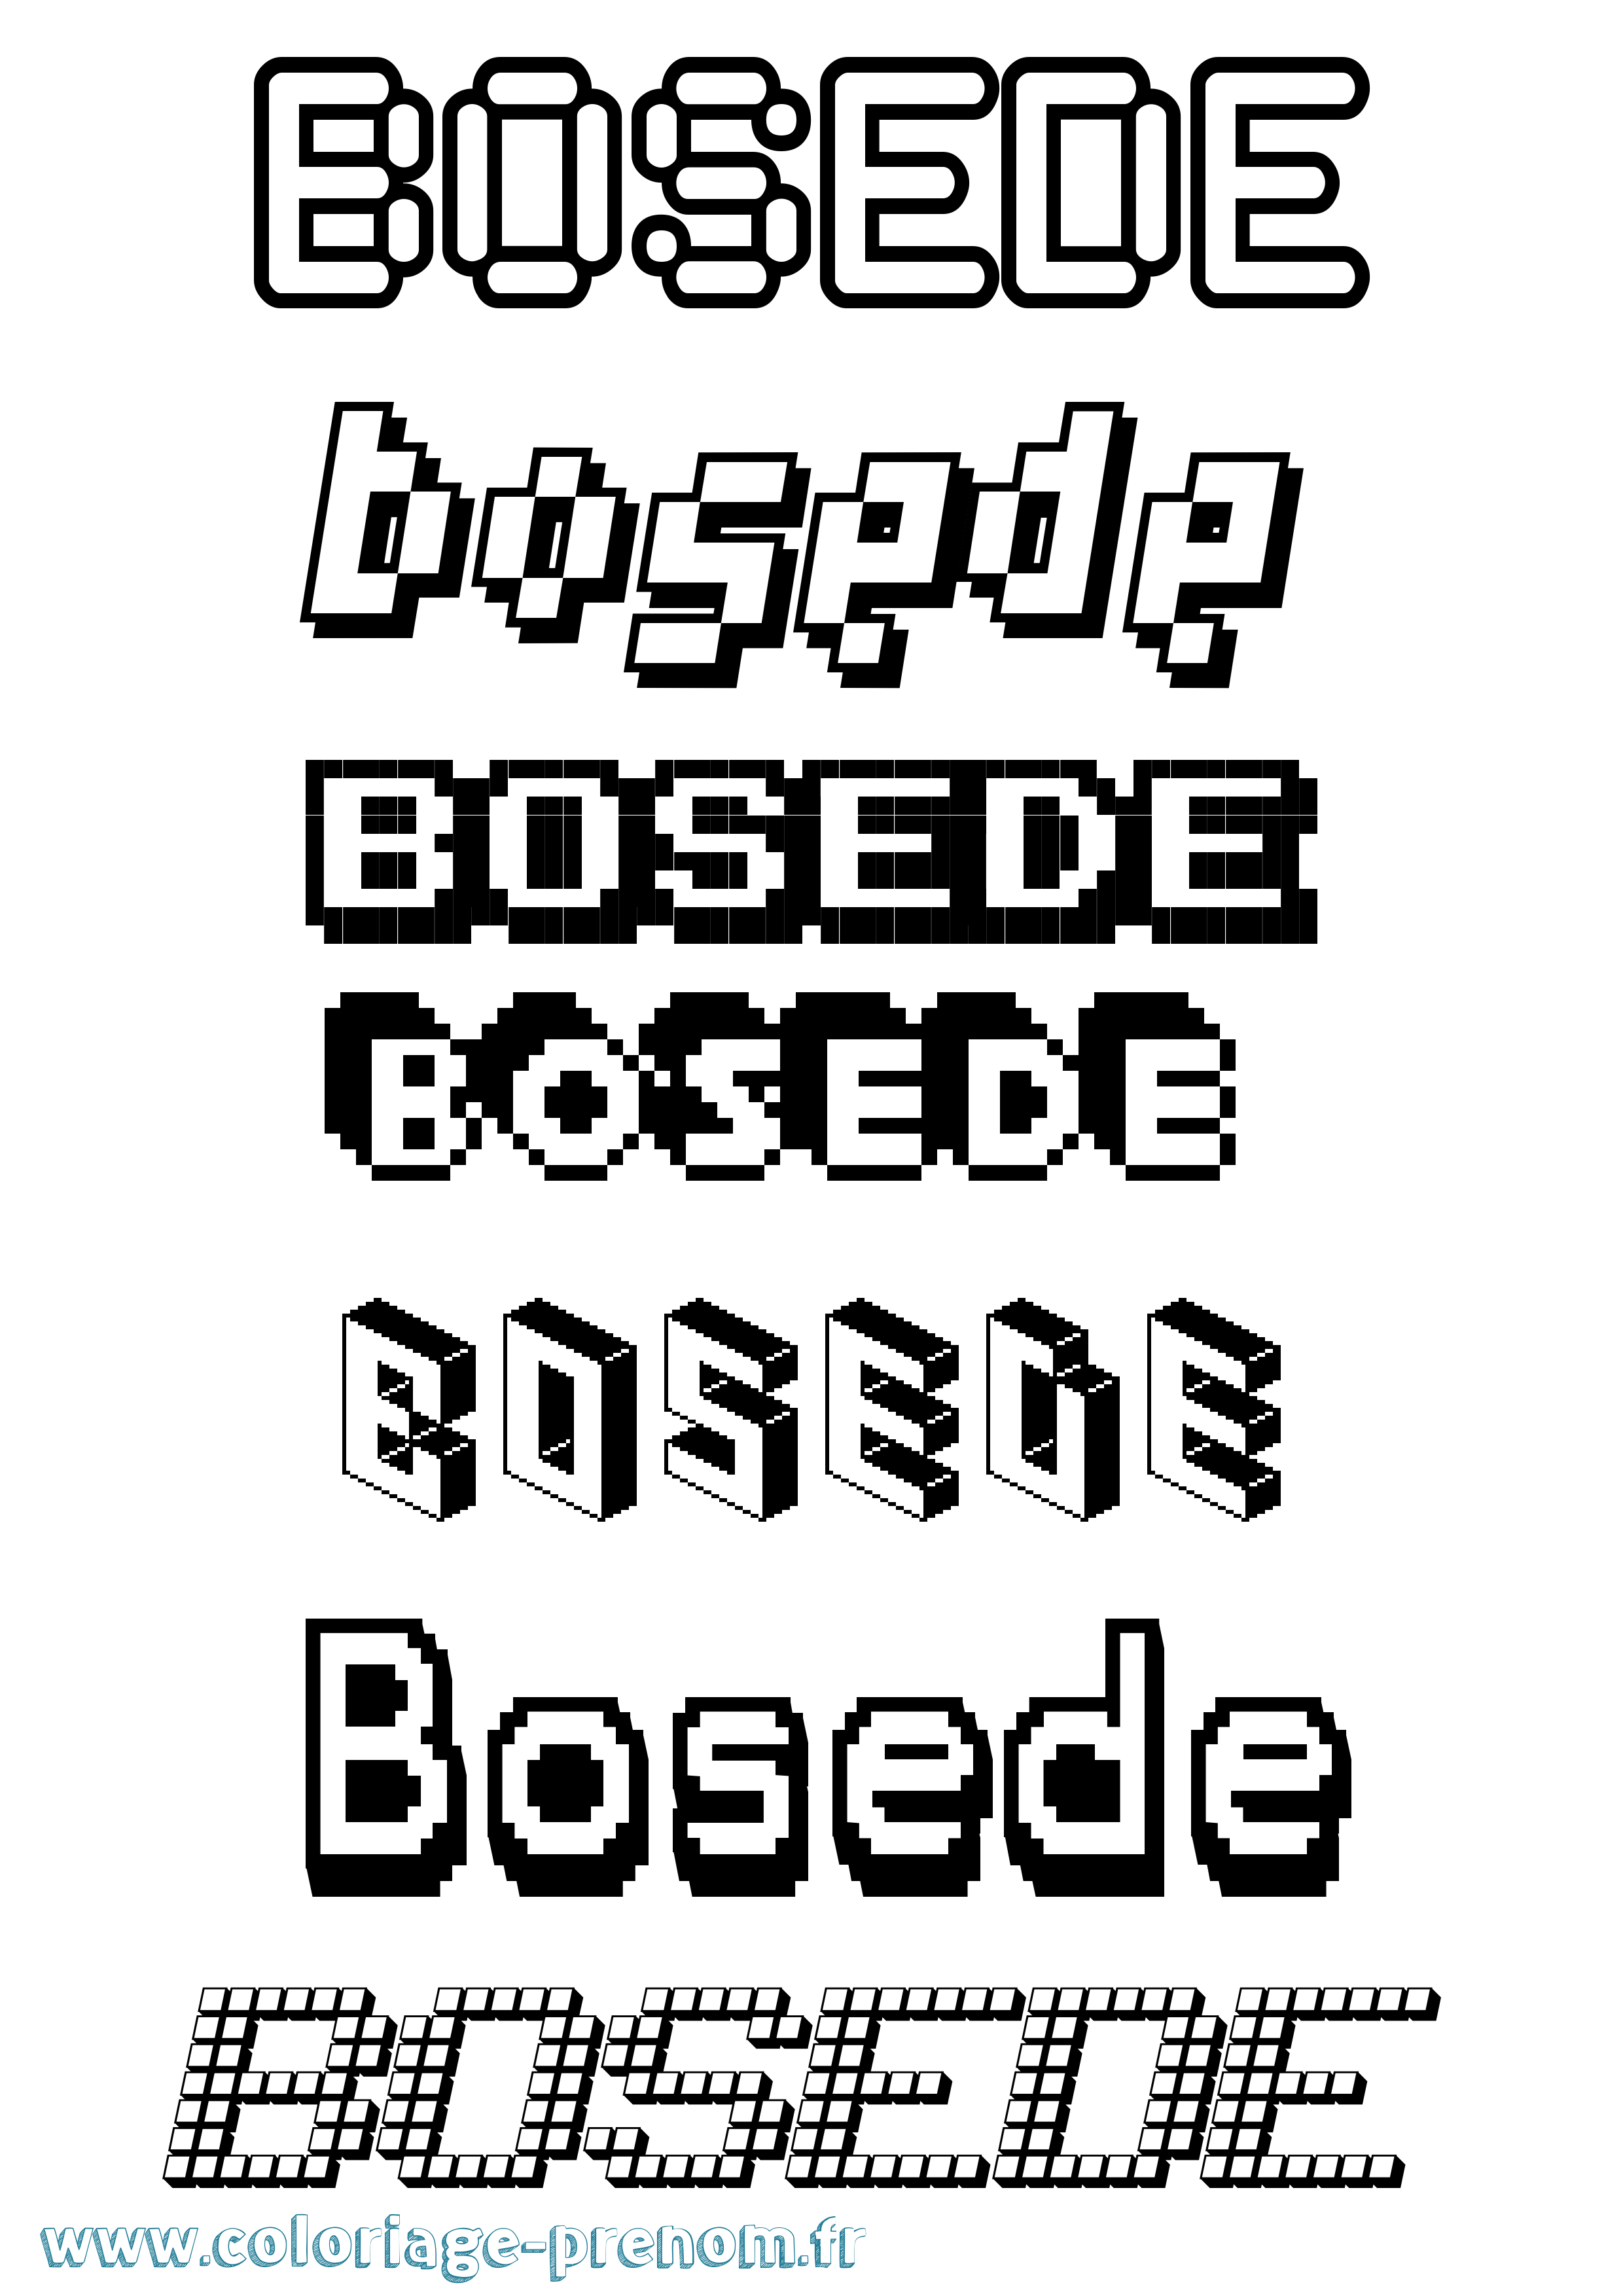 Coloriage prénom Bosede Pixel